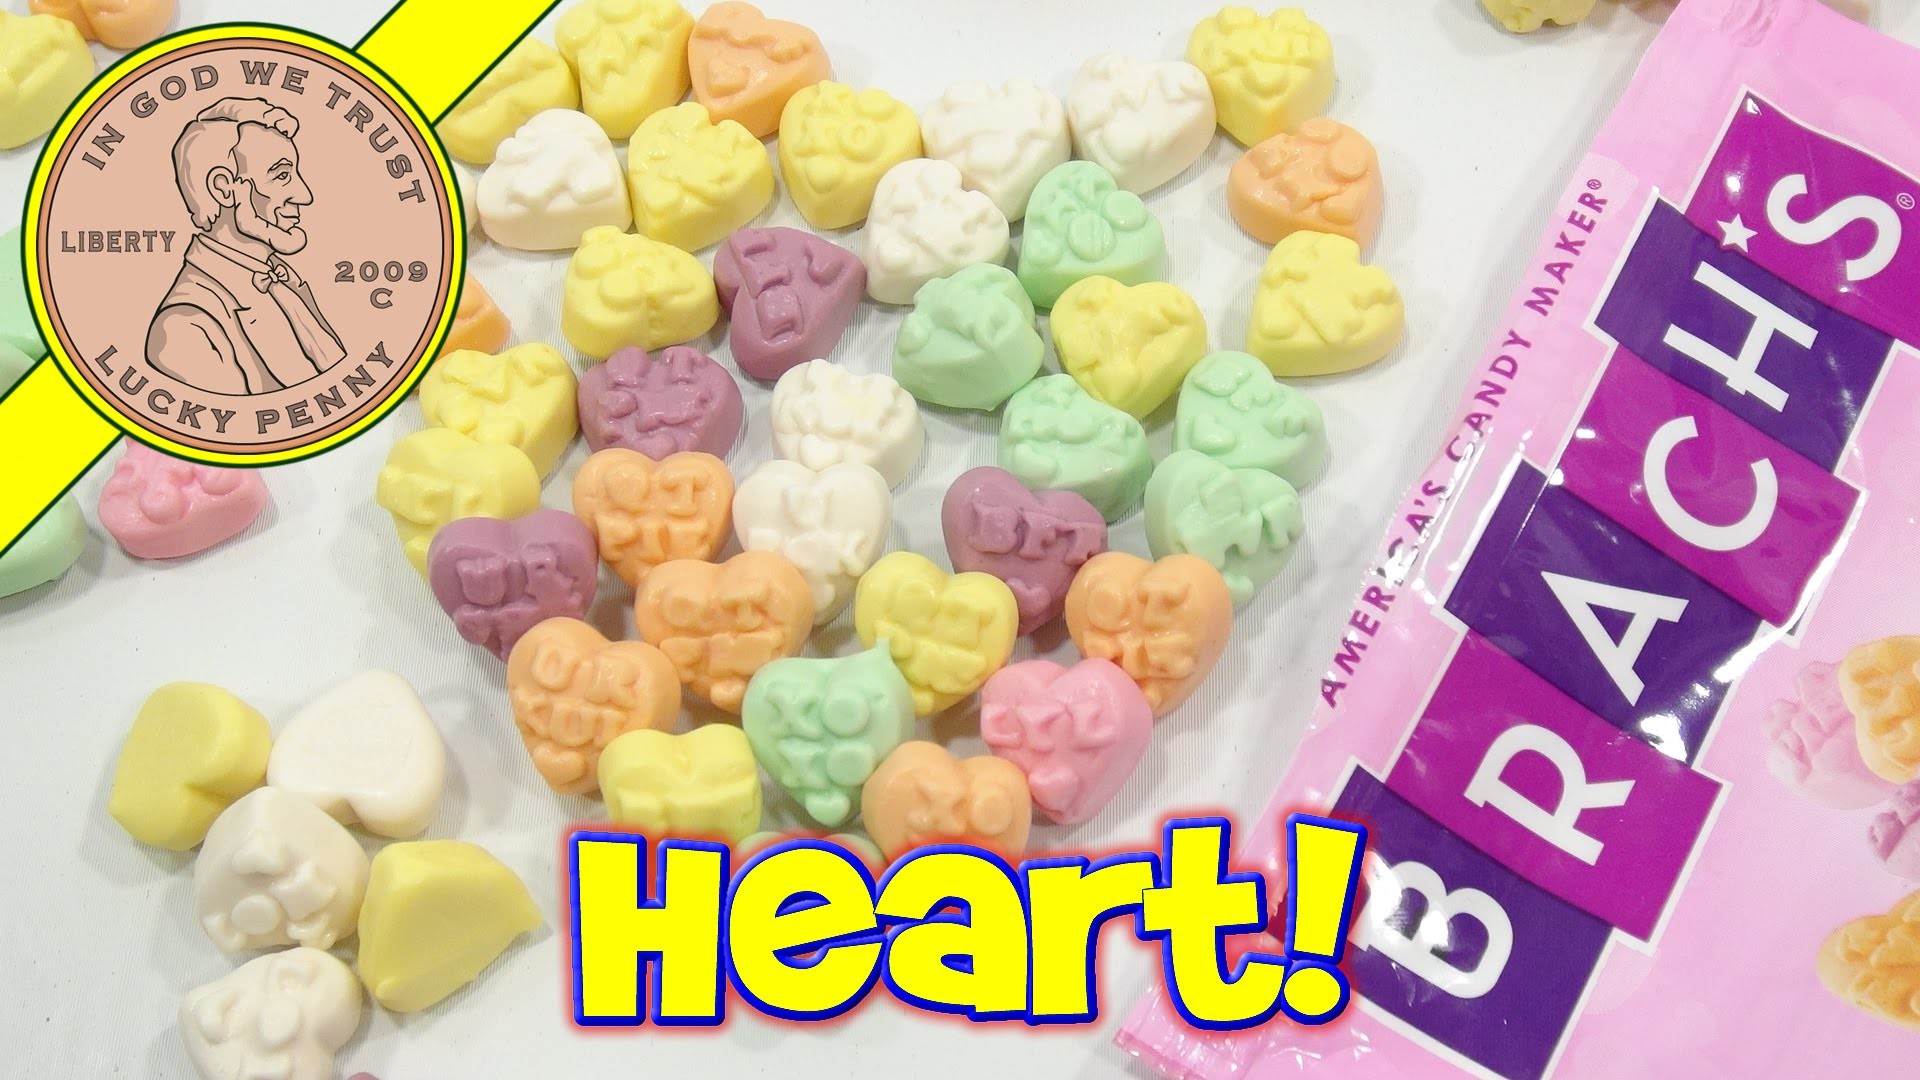 1920x1080 Brach's Conversation Hearts Gummi Valentine's Candy - I Heart You! - YouTube